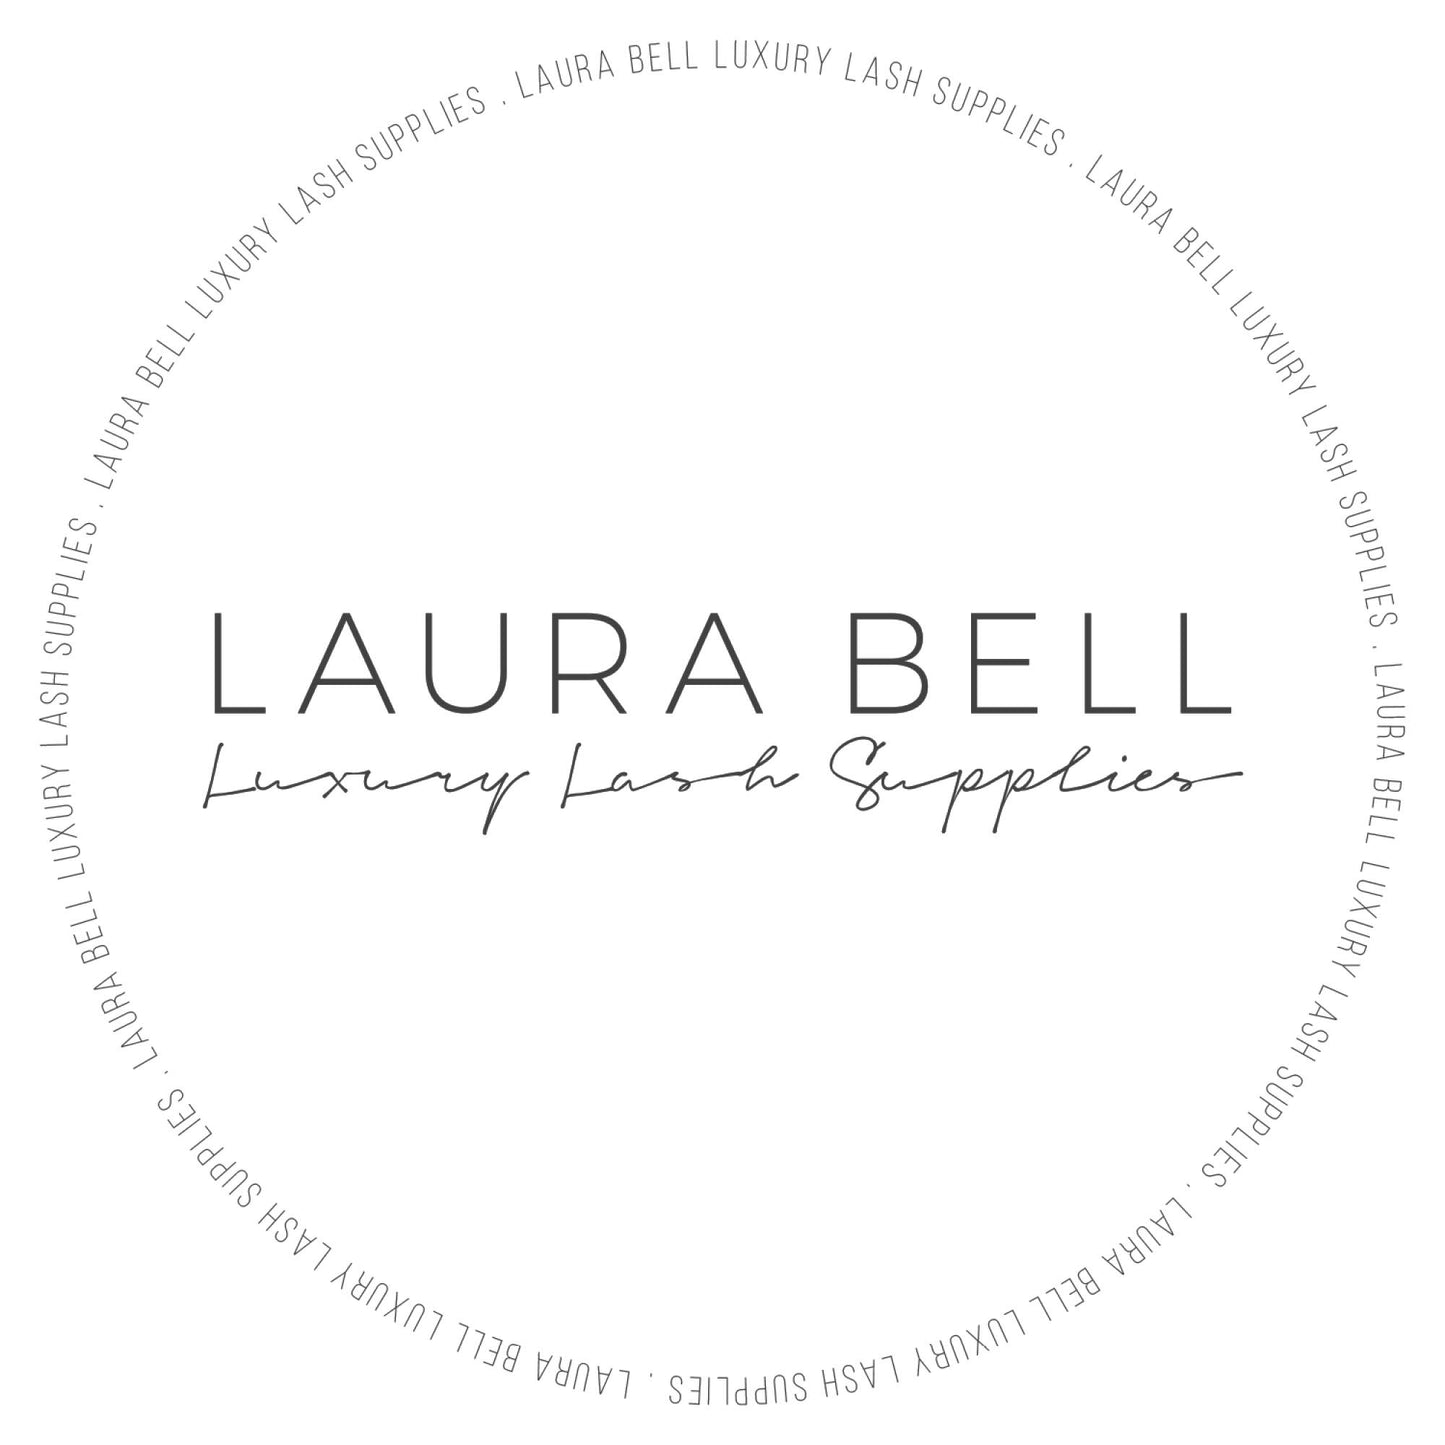 Russian Volume Student Kit - Laura Bell Luxury Lash Supplies